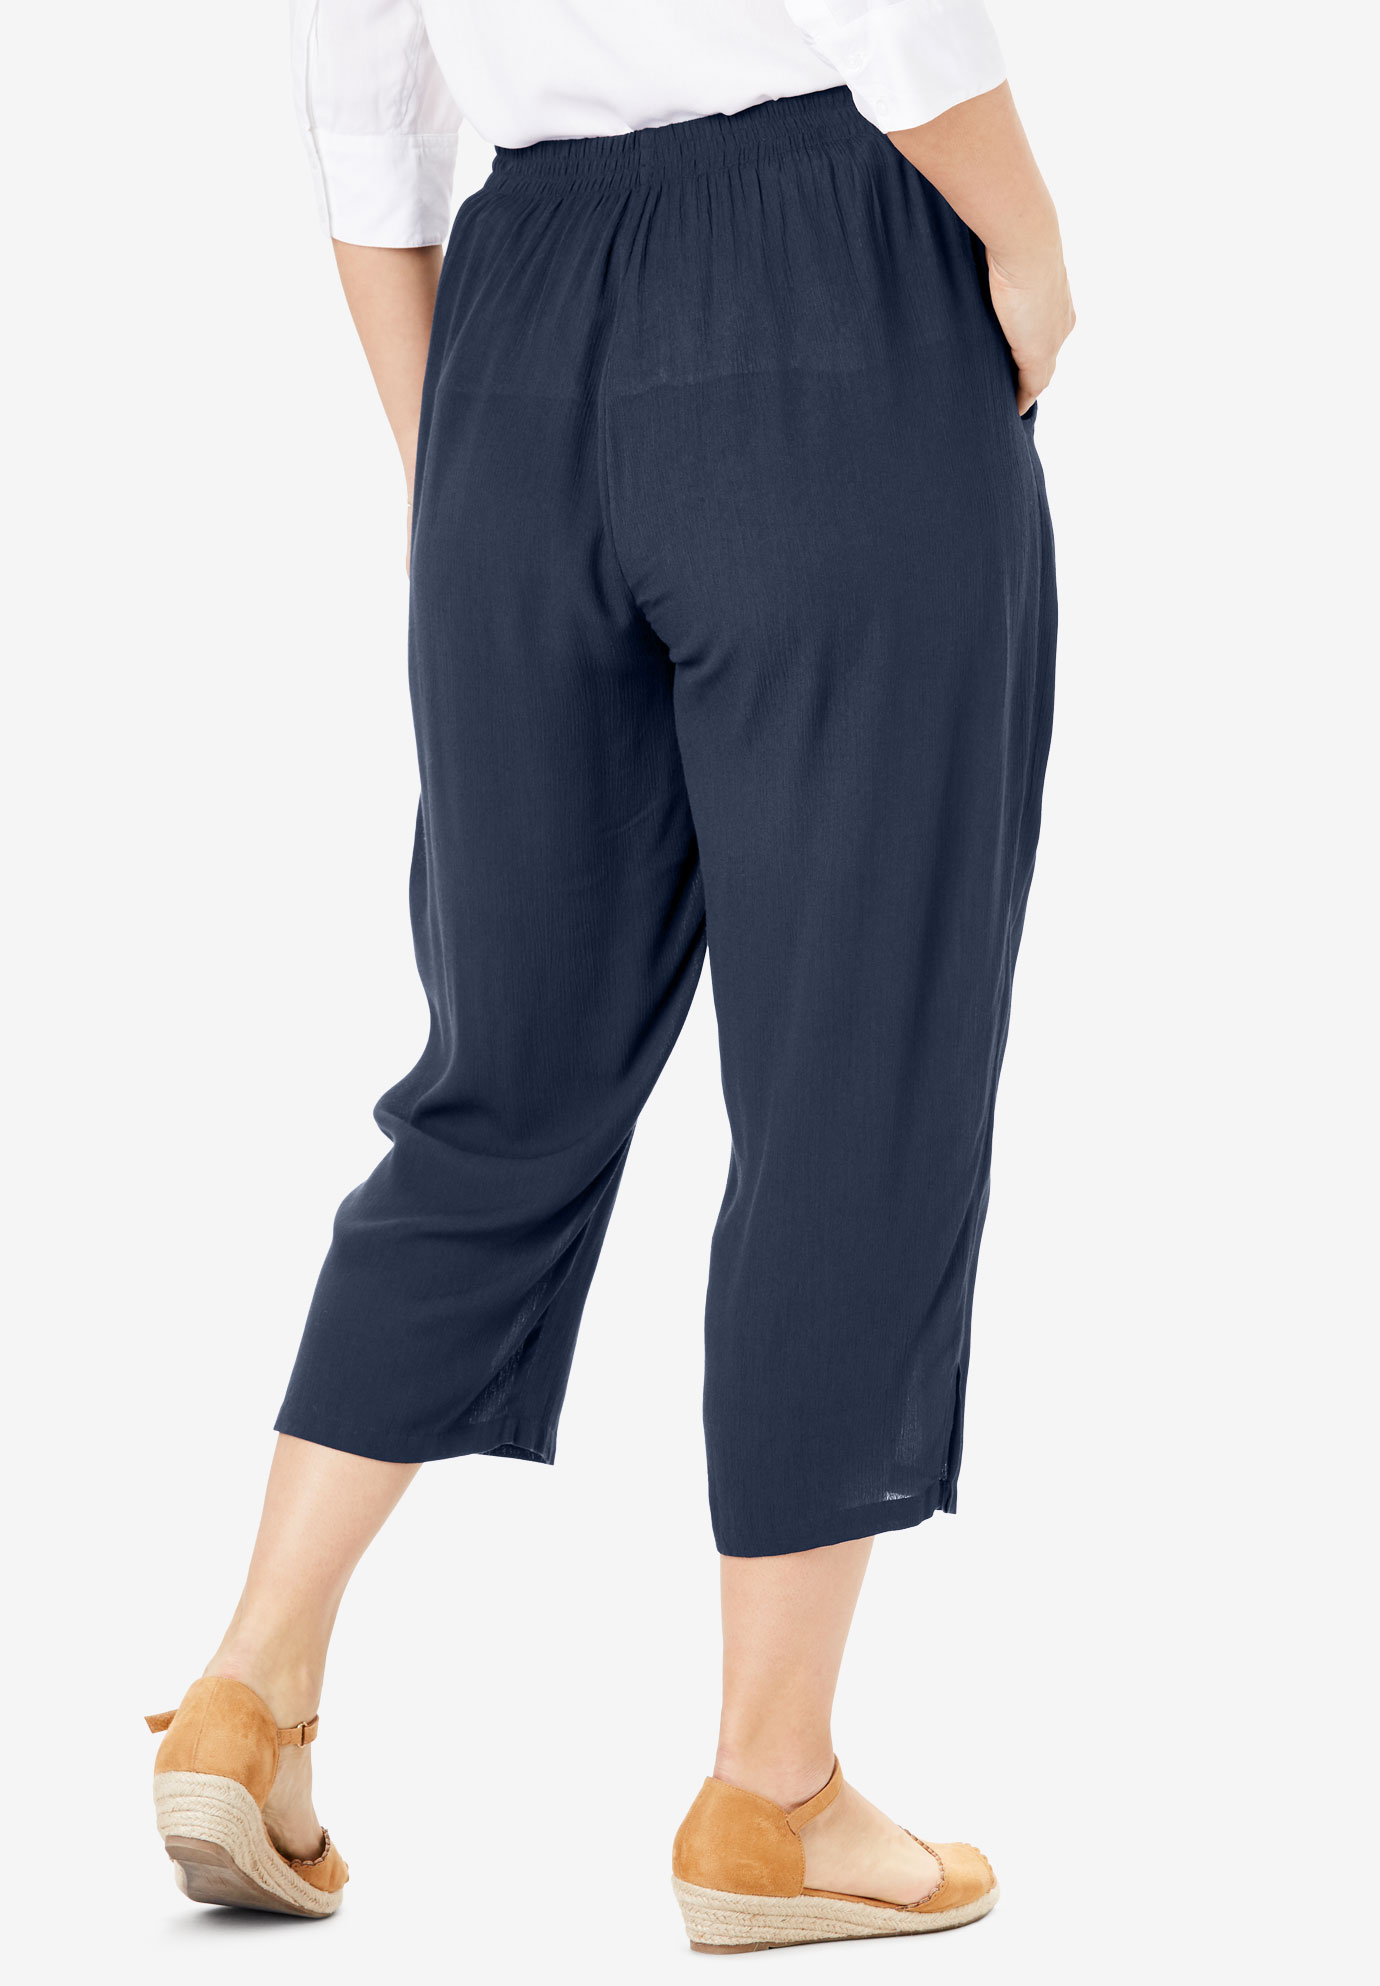 Crinkle capri pants| Plus Size Bottoms | Woman Within